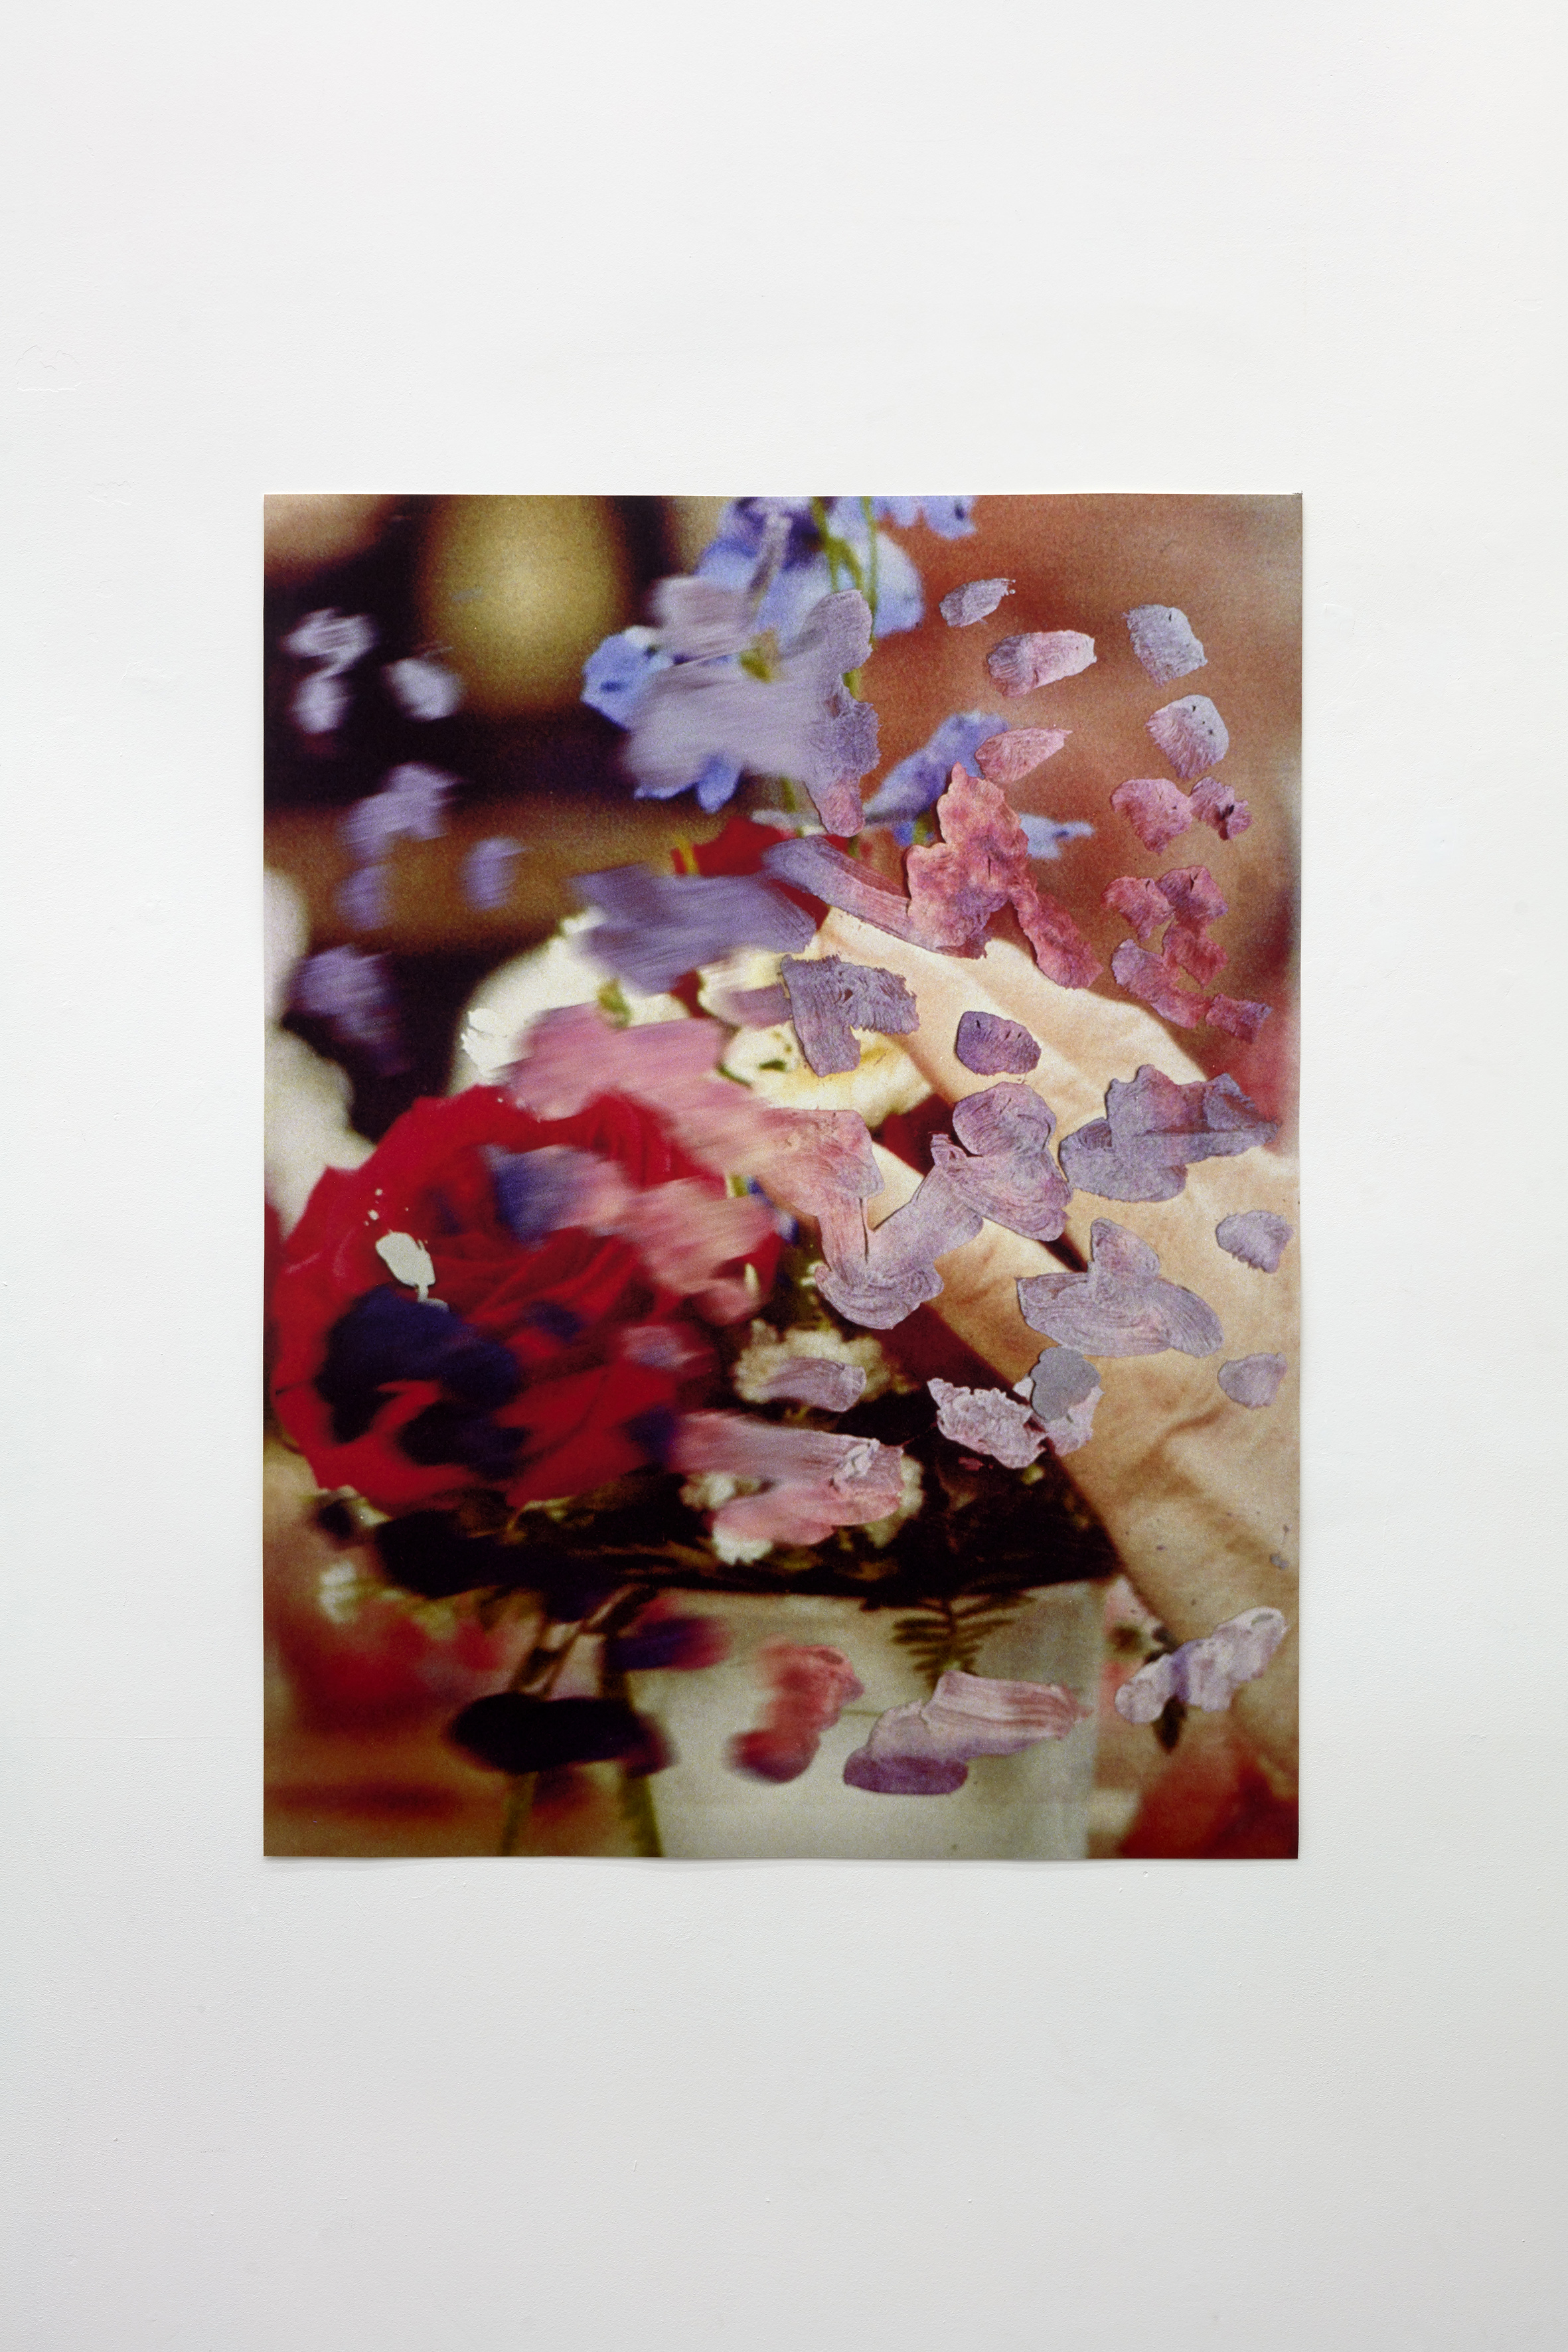  Flower Arrangement  2018  101x134cm  pigment print on german etching paper. 